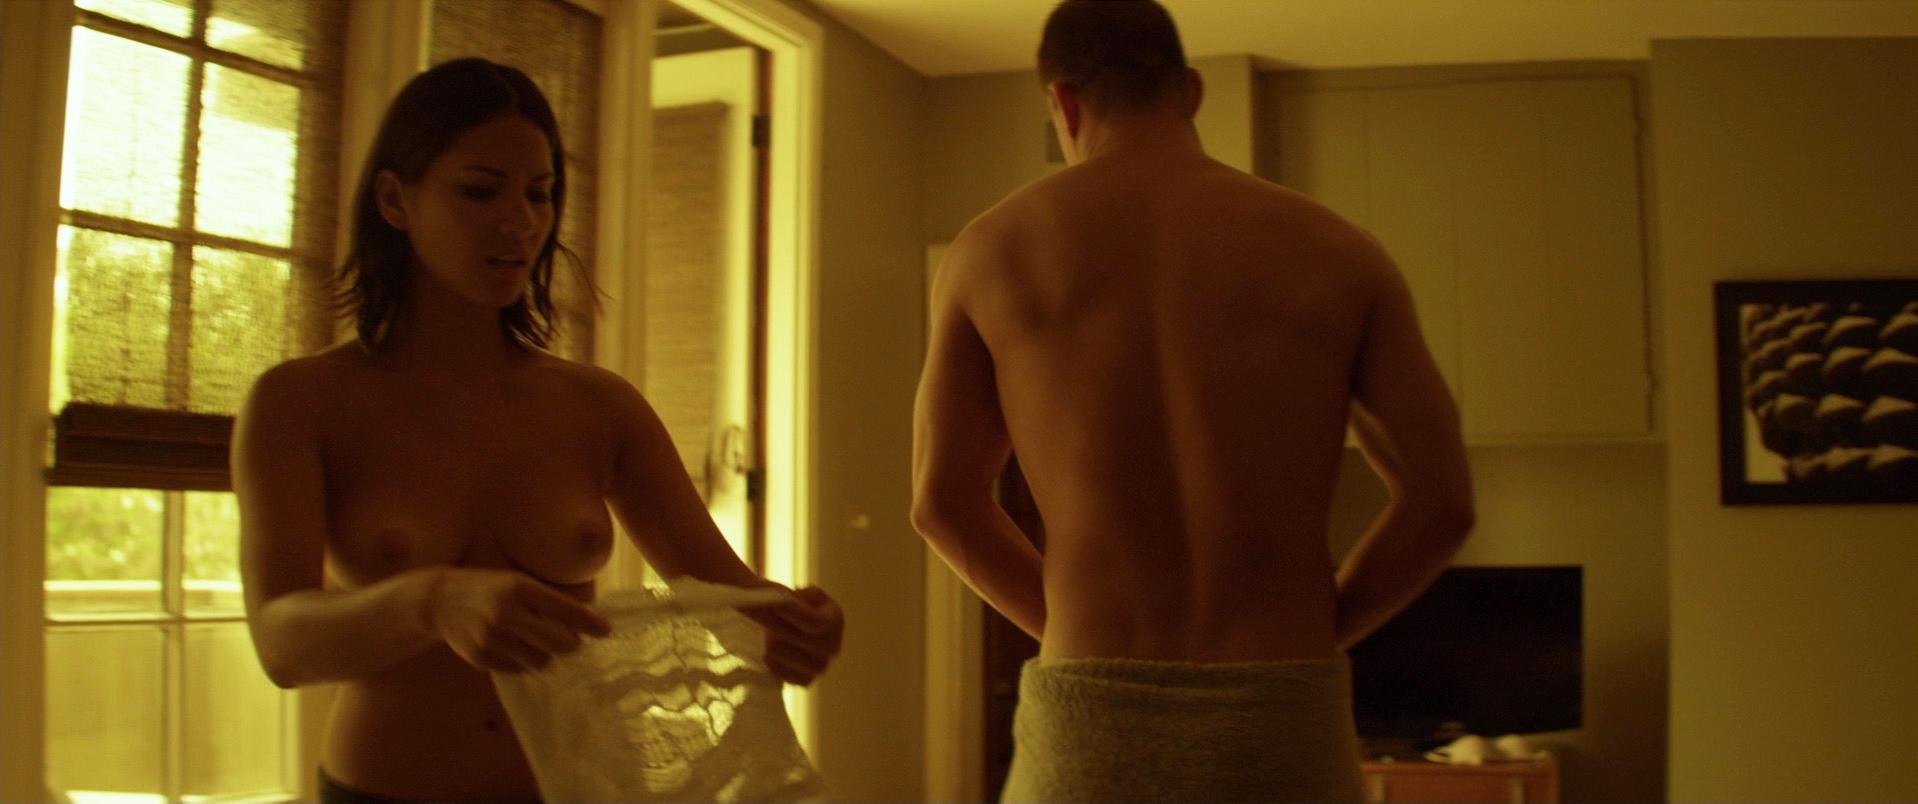 Полностью голая Оливия Манн на кадрах из фильма "Супер Майк" (гру...